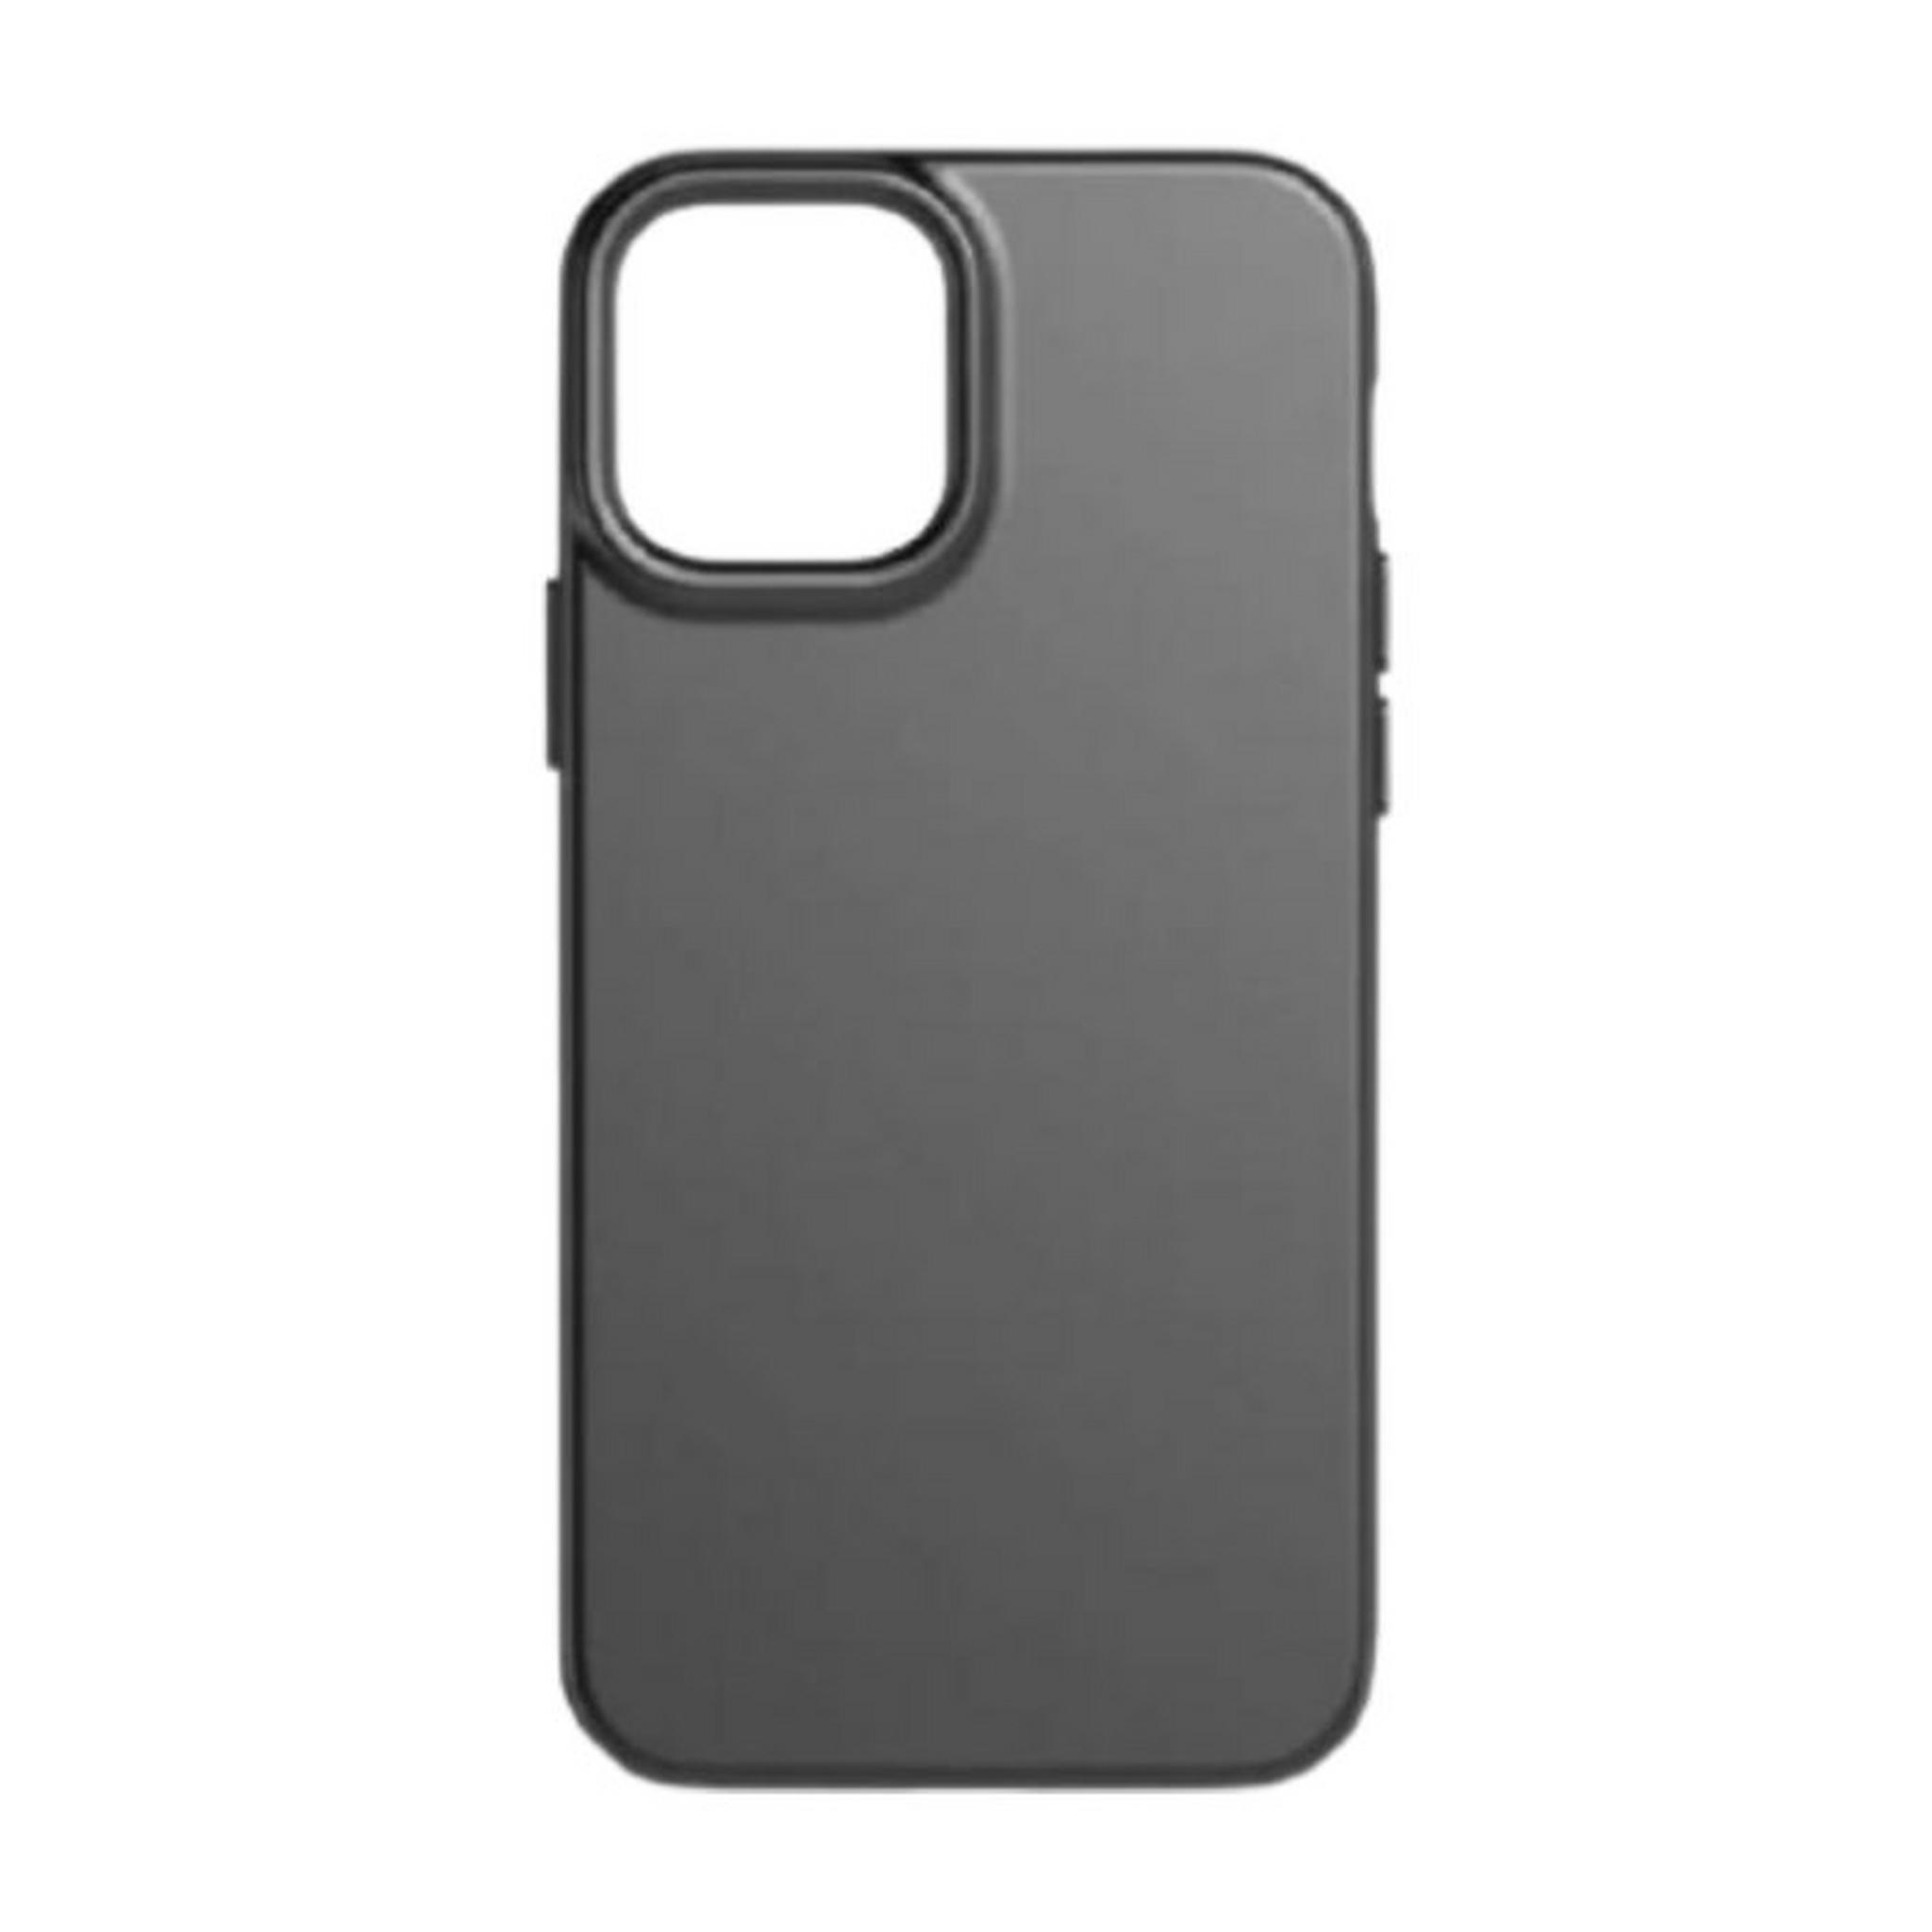 Tech21 Evo Slim iPhone 12 Pro Max Case - Charcoal BLack